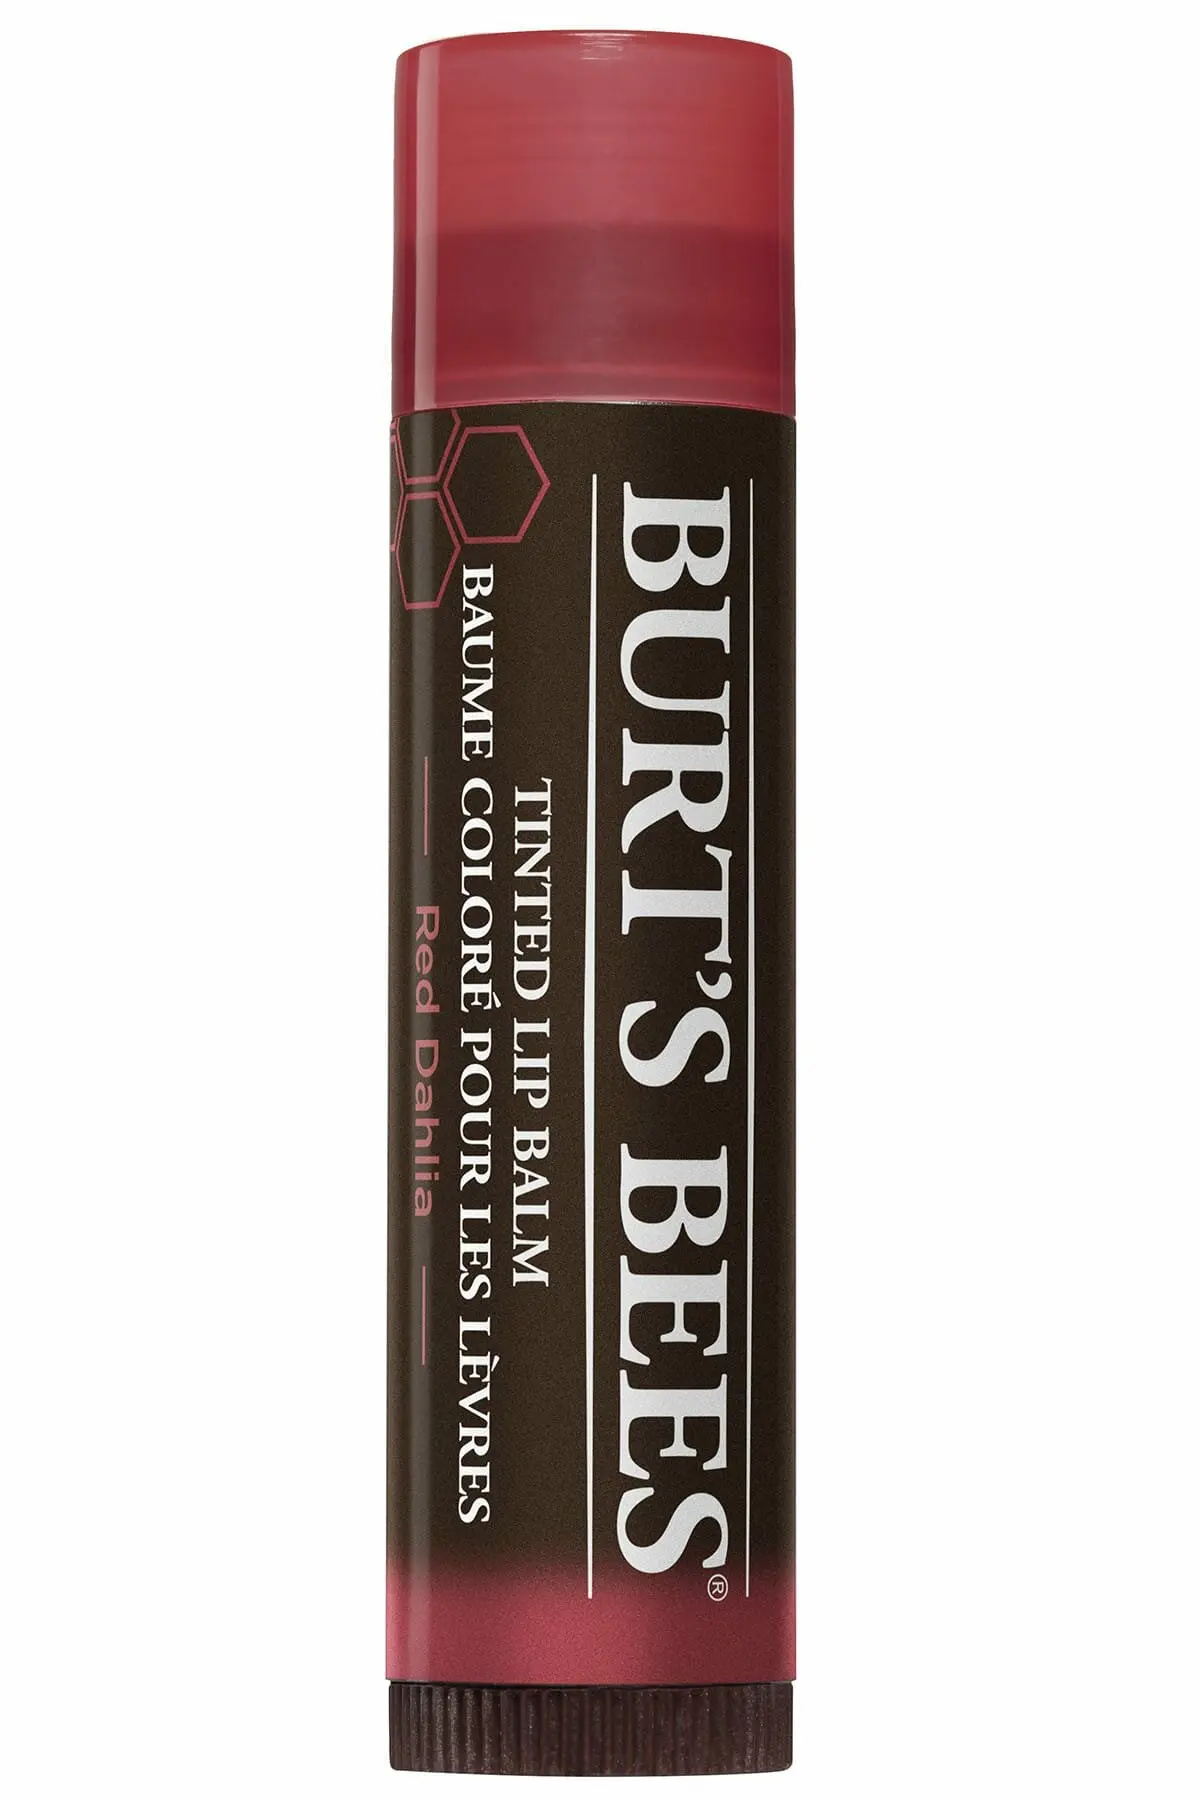 

Burt's Bees Renkli Dudak Bakım Kremi Vişne - Tinted Lip Balm Red Dahlia 4.25 g